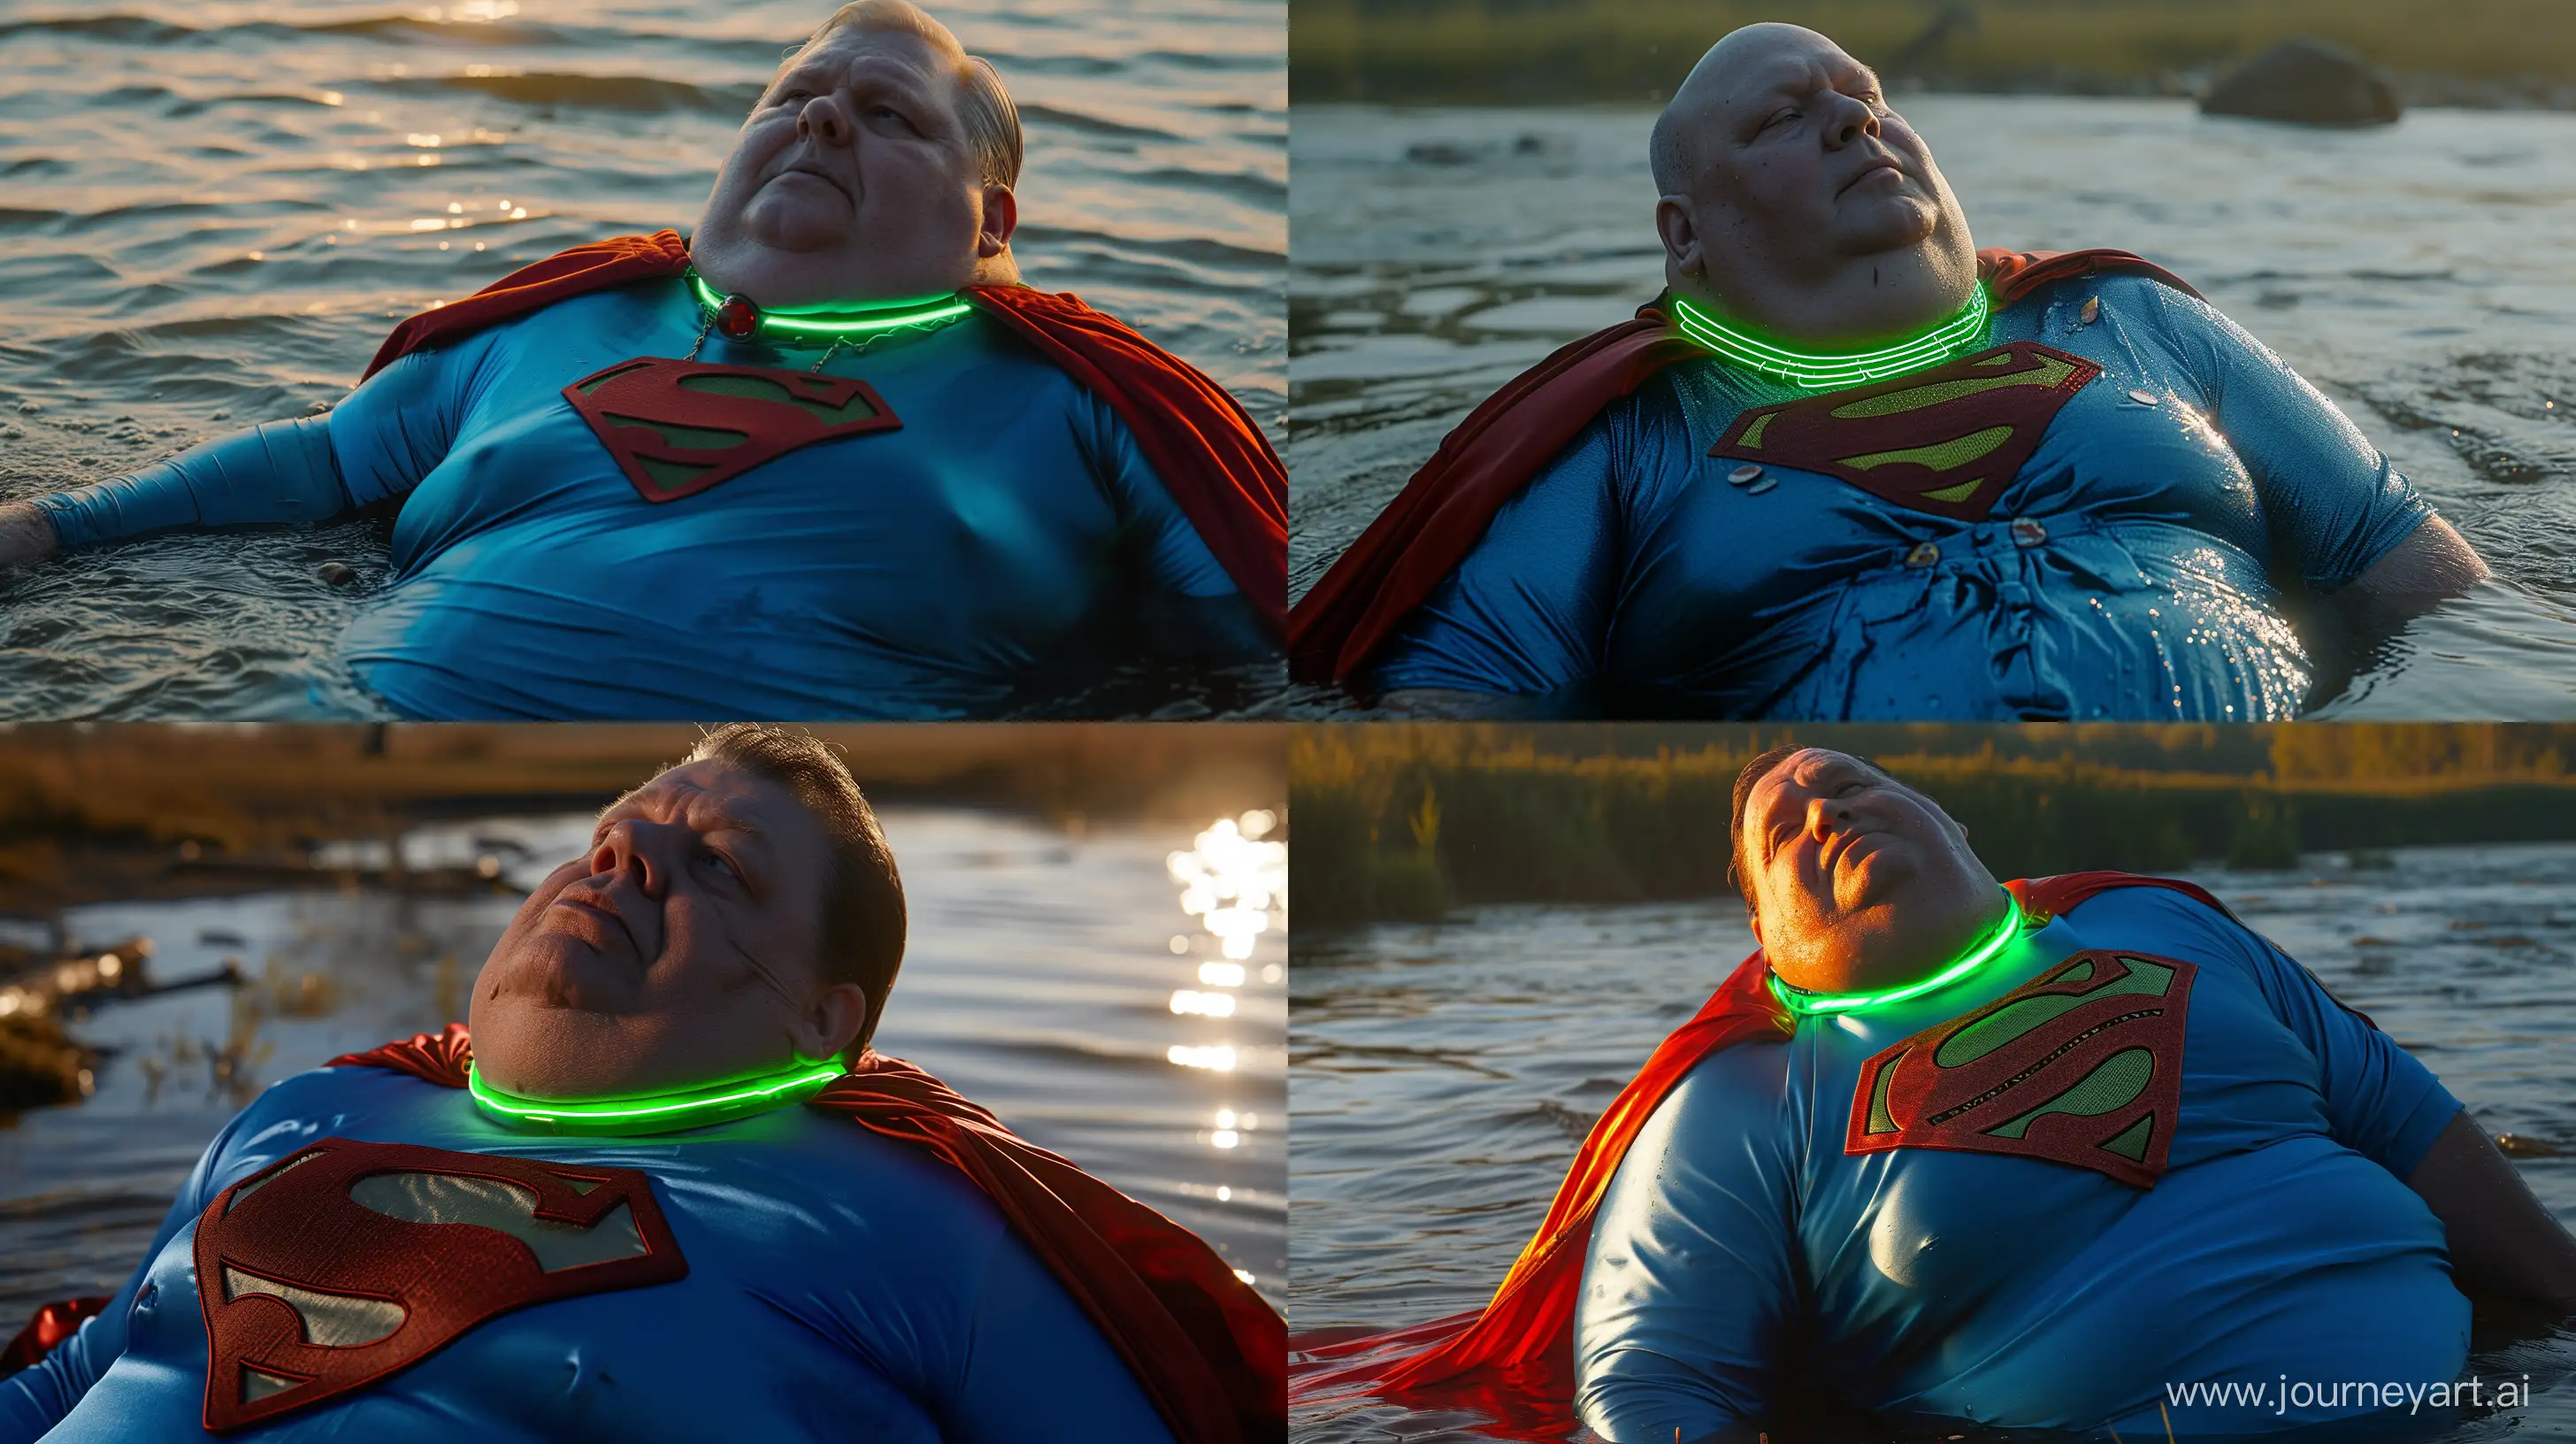 Elderly-Superman-Lounging-in-Refreshing-River-Waters